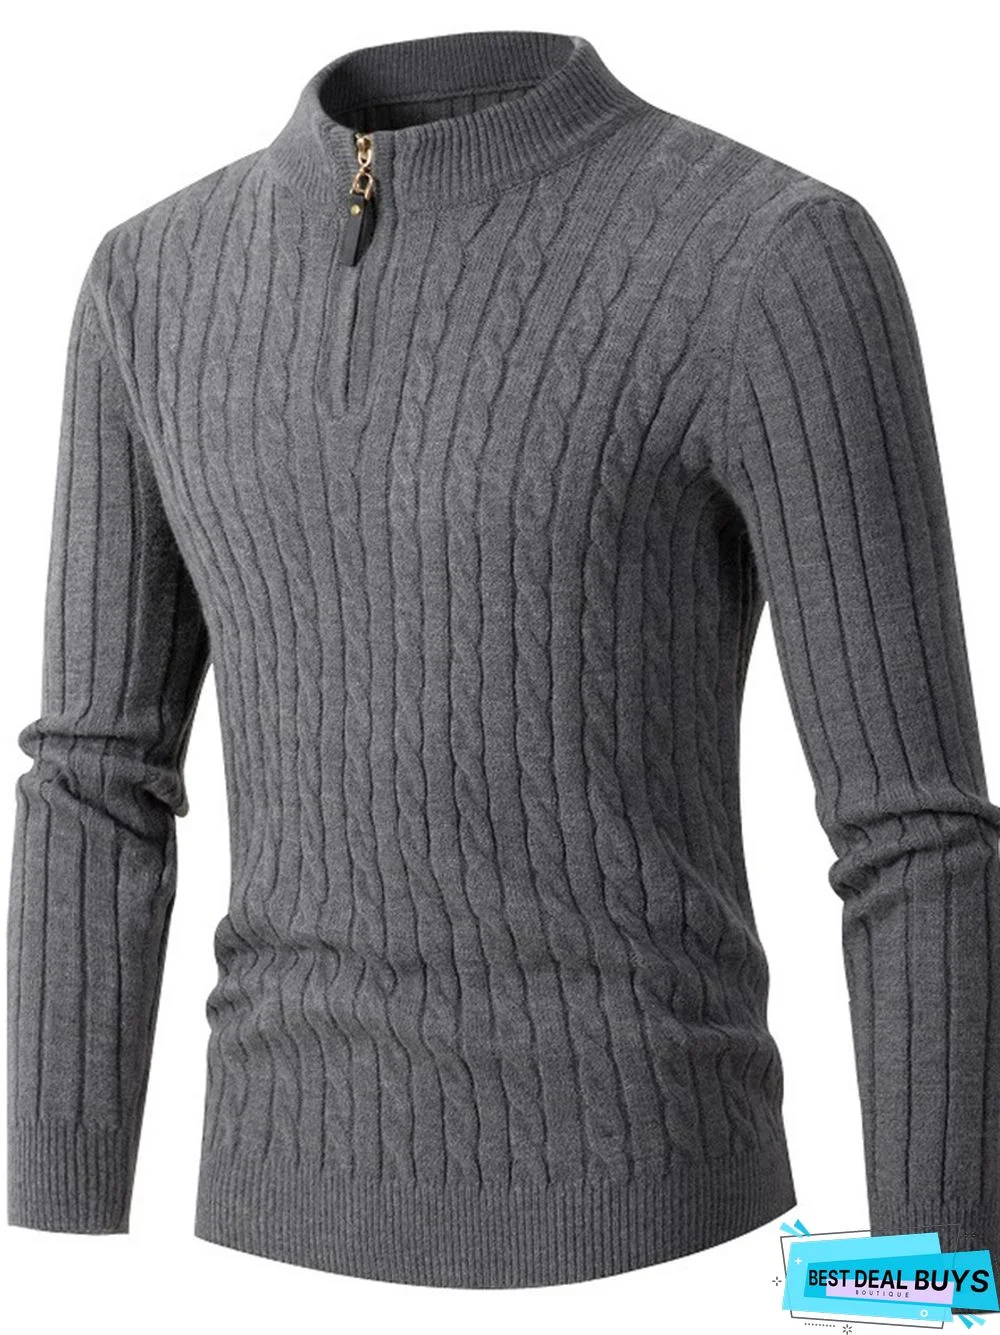 Men's Long-Sleeved Twist Half-Turtleneck Zip-Knit Sweater